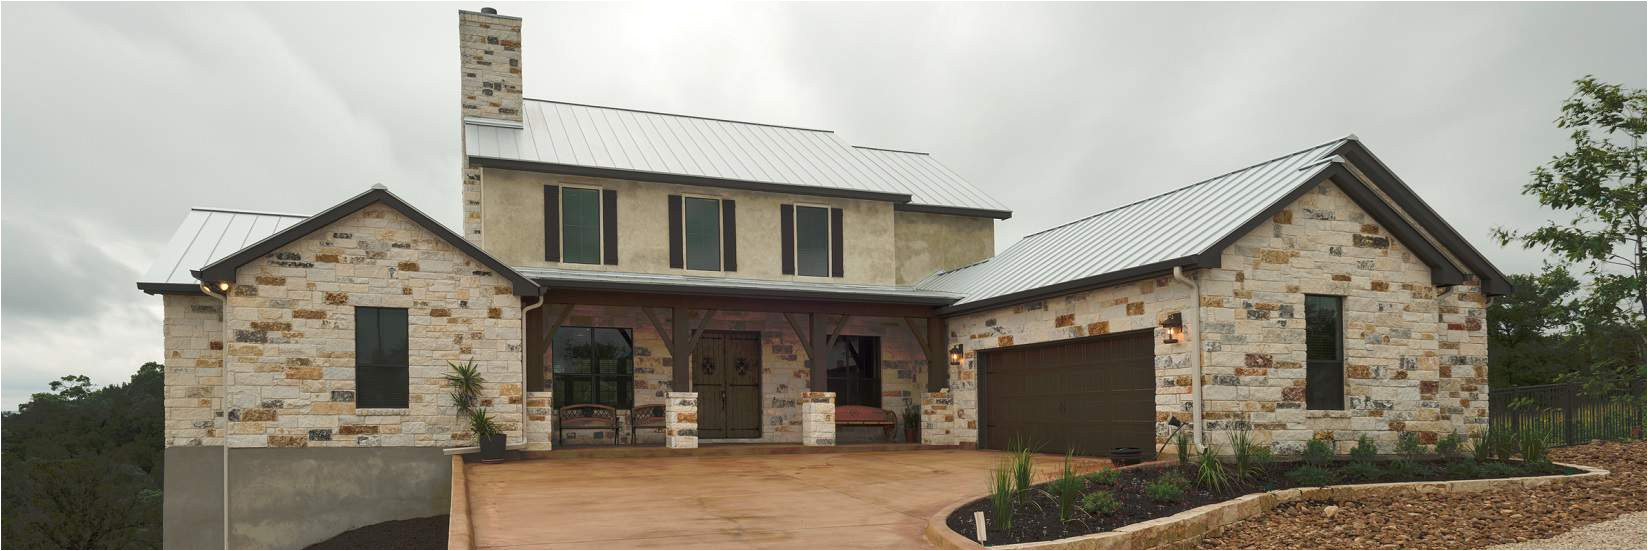 south texas custom home plans